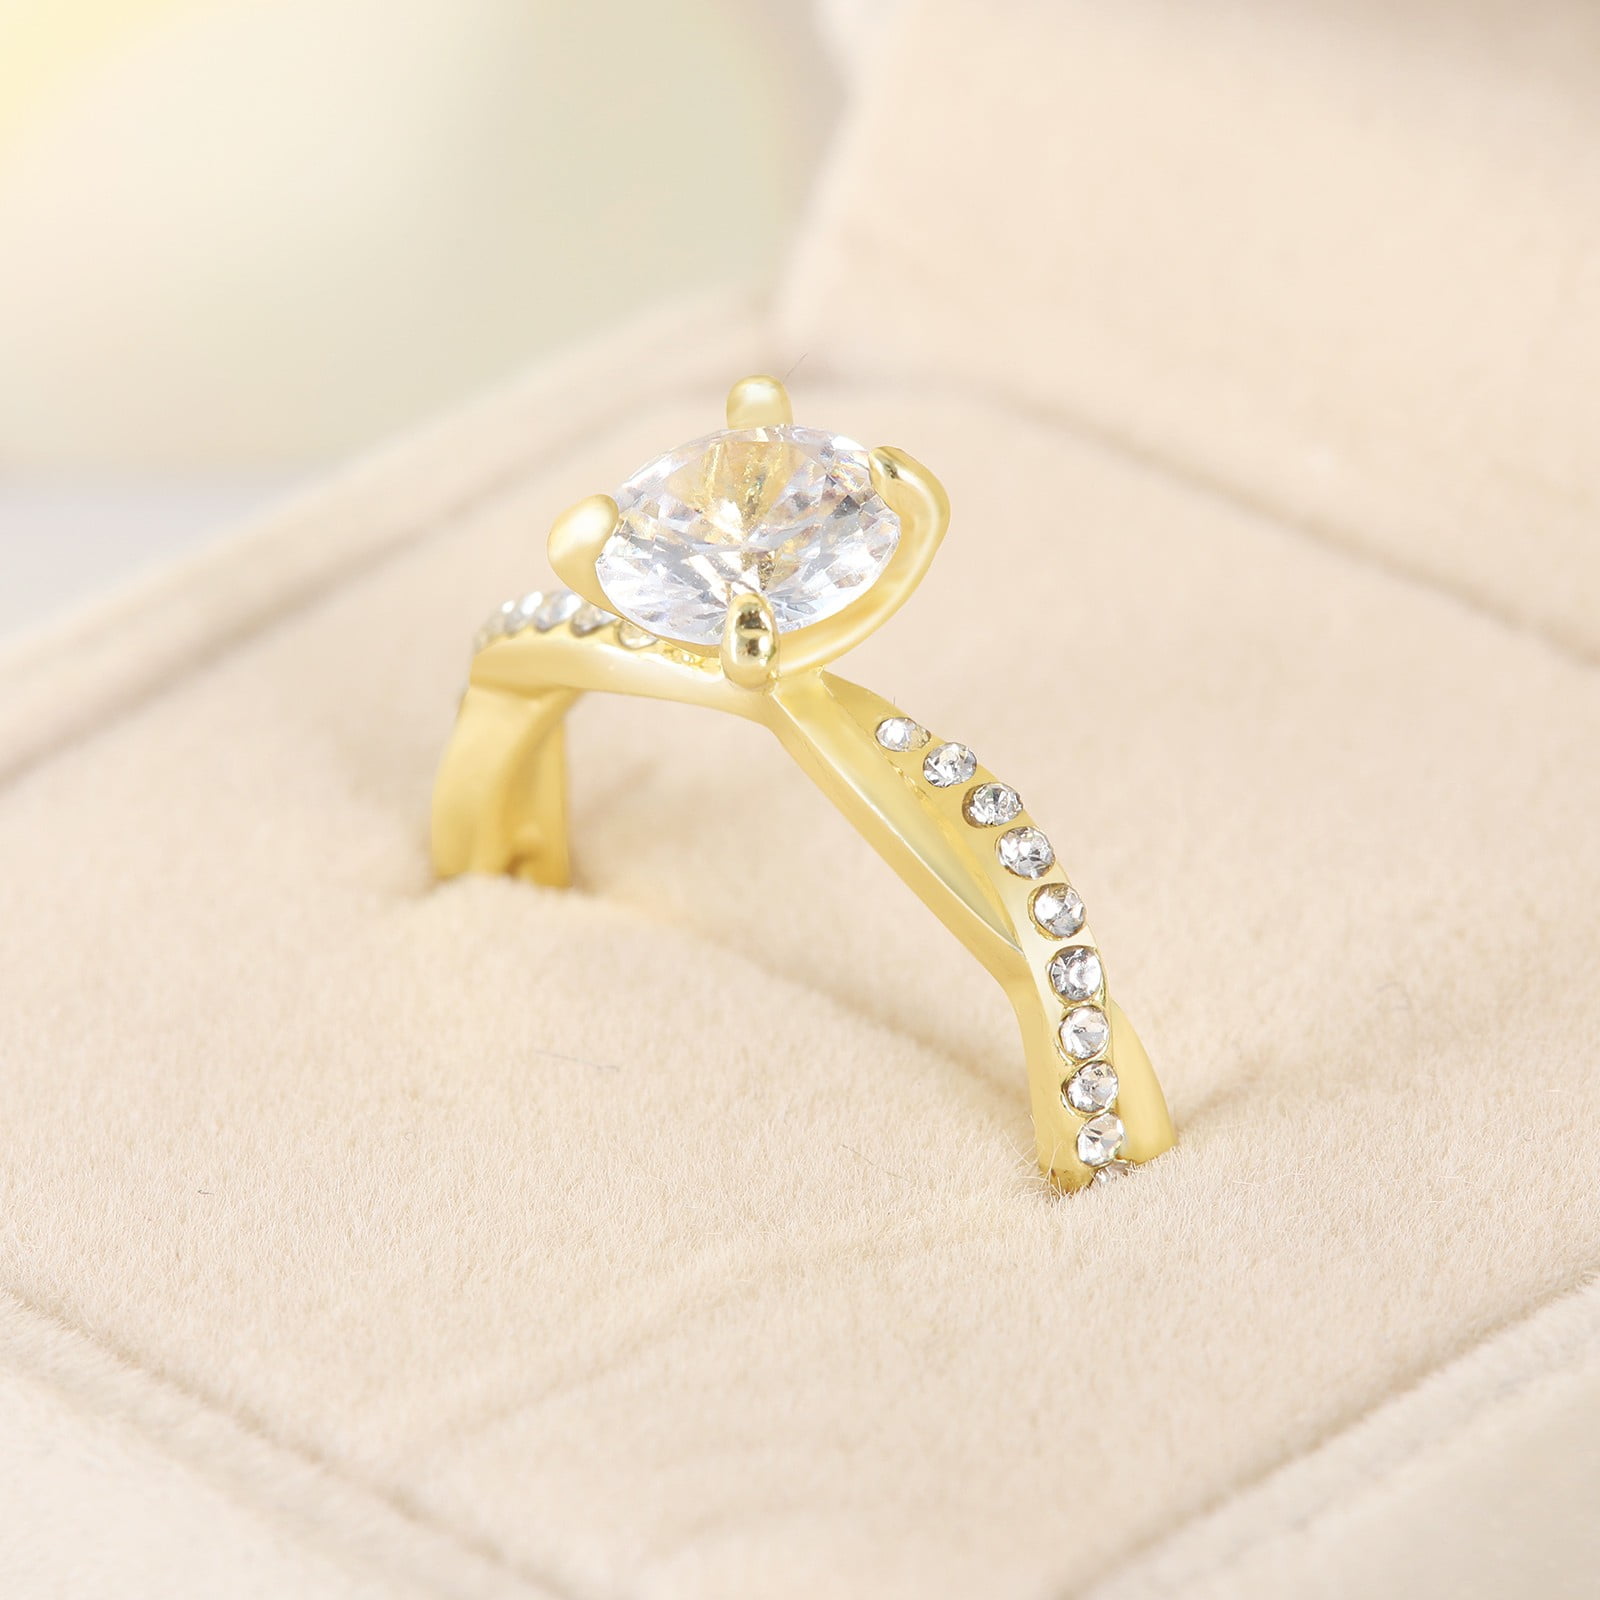 Women's ring, zircon sparkling diamond ring with beautiful